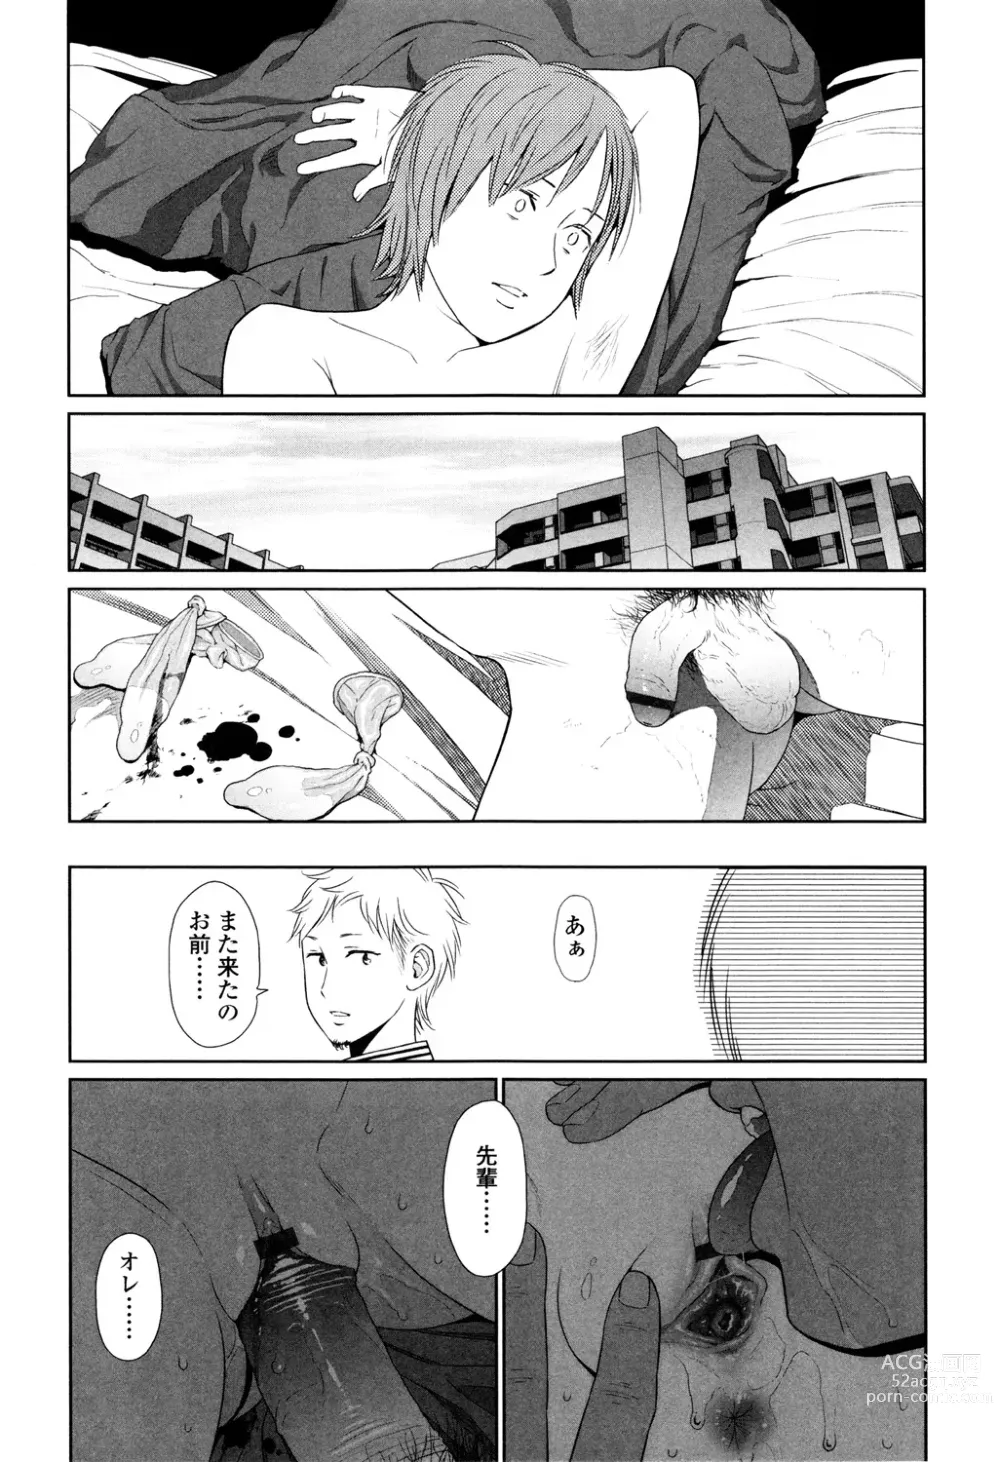 Page 20 of manga Nymphodelic